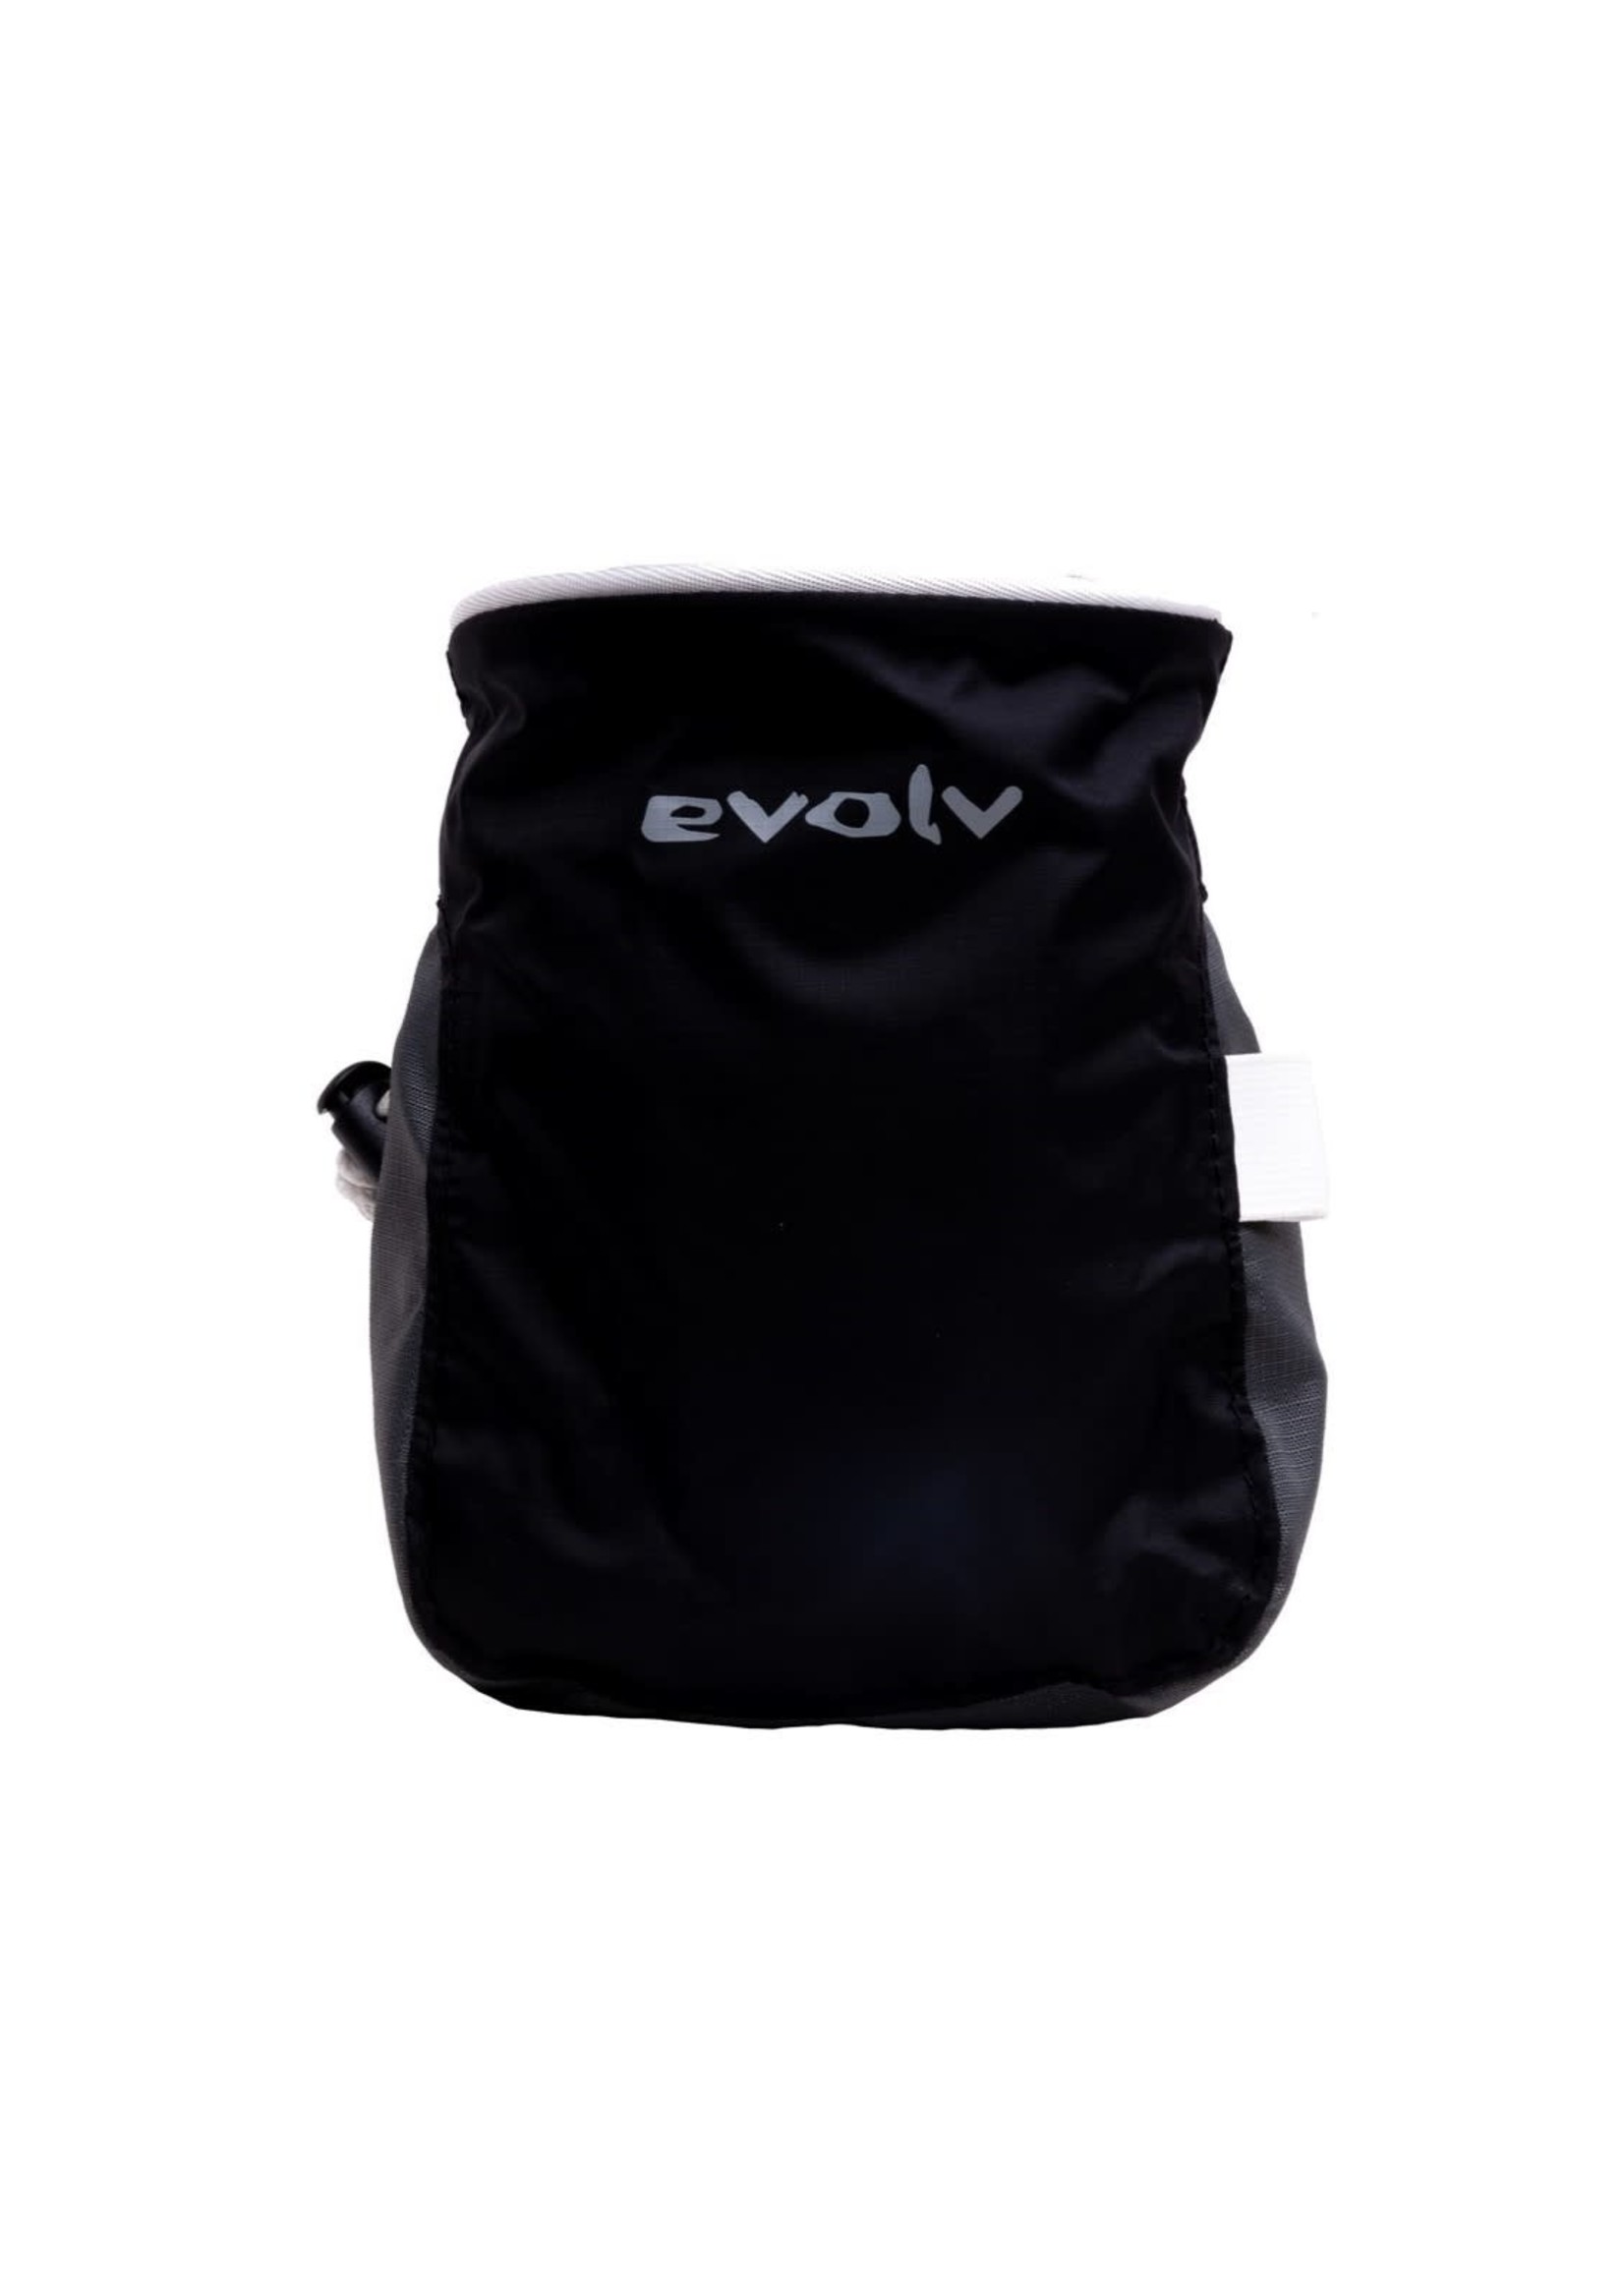 Evolv Evolv Superlight Chalk Bag